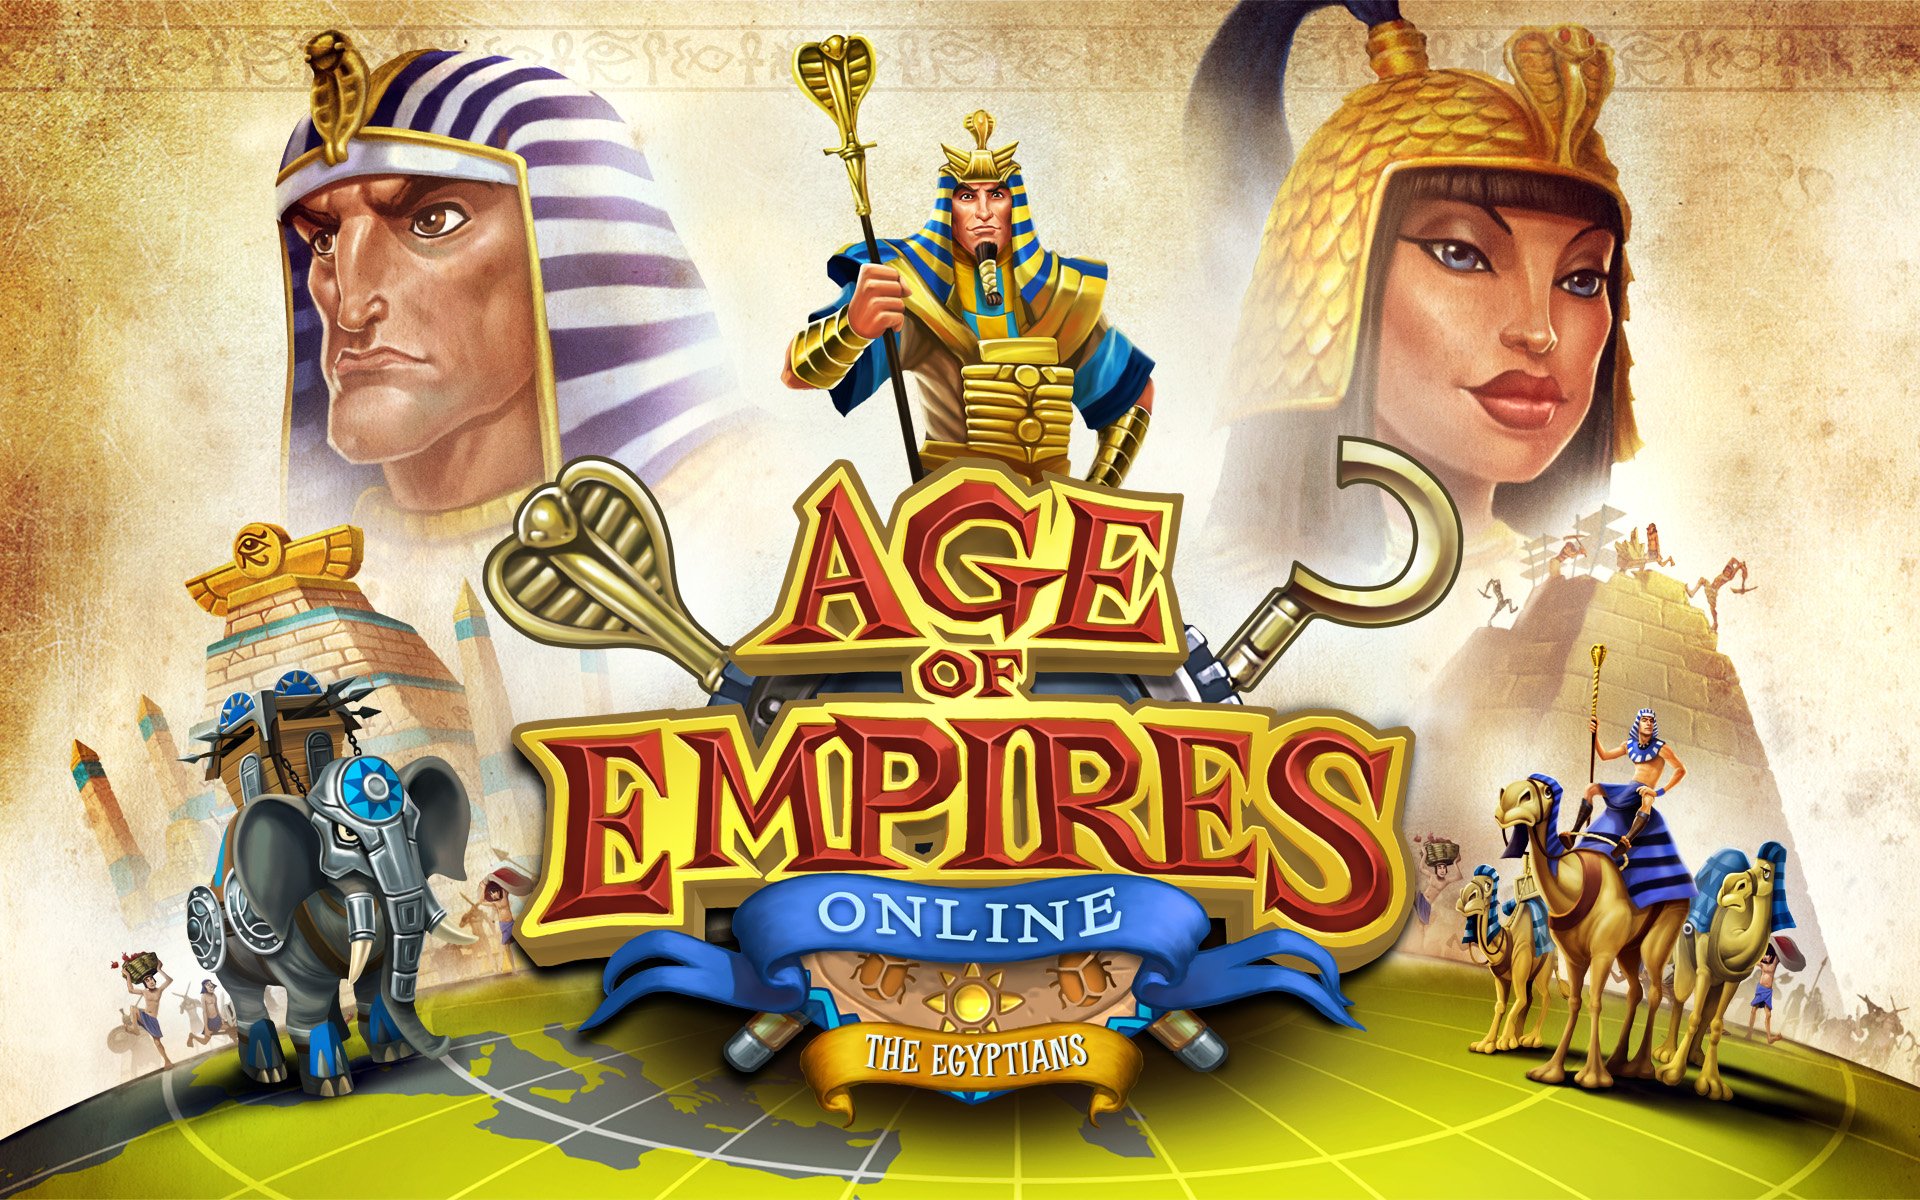 age of empires 3 reddit